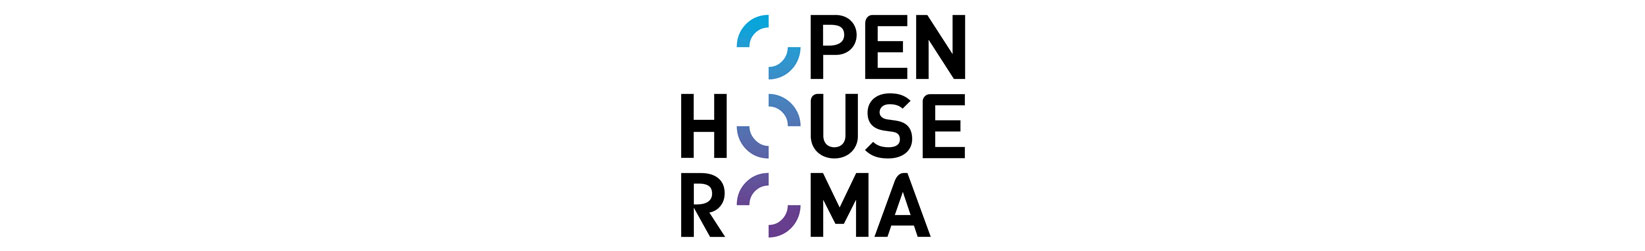 Open House Roma 2013